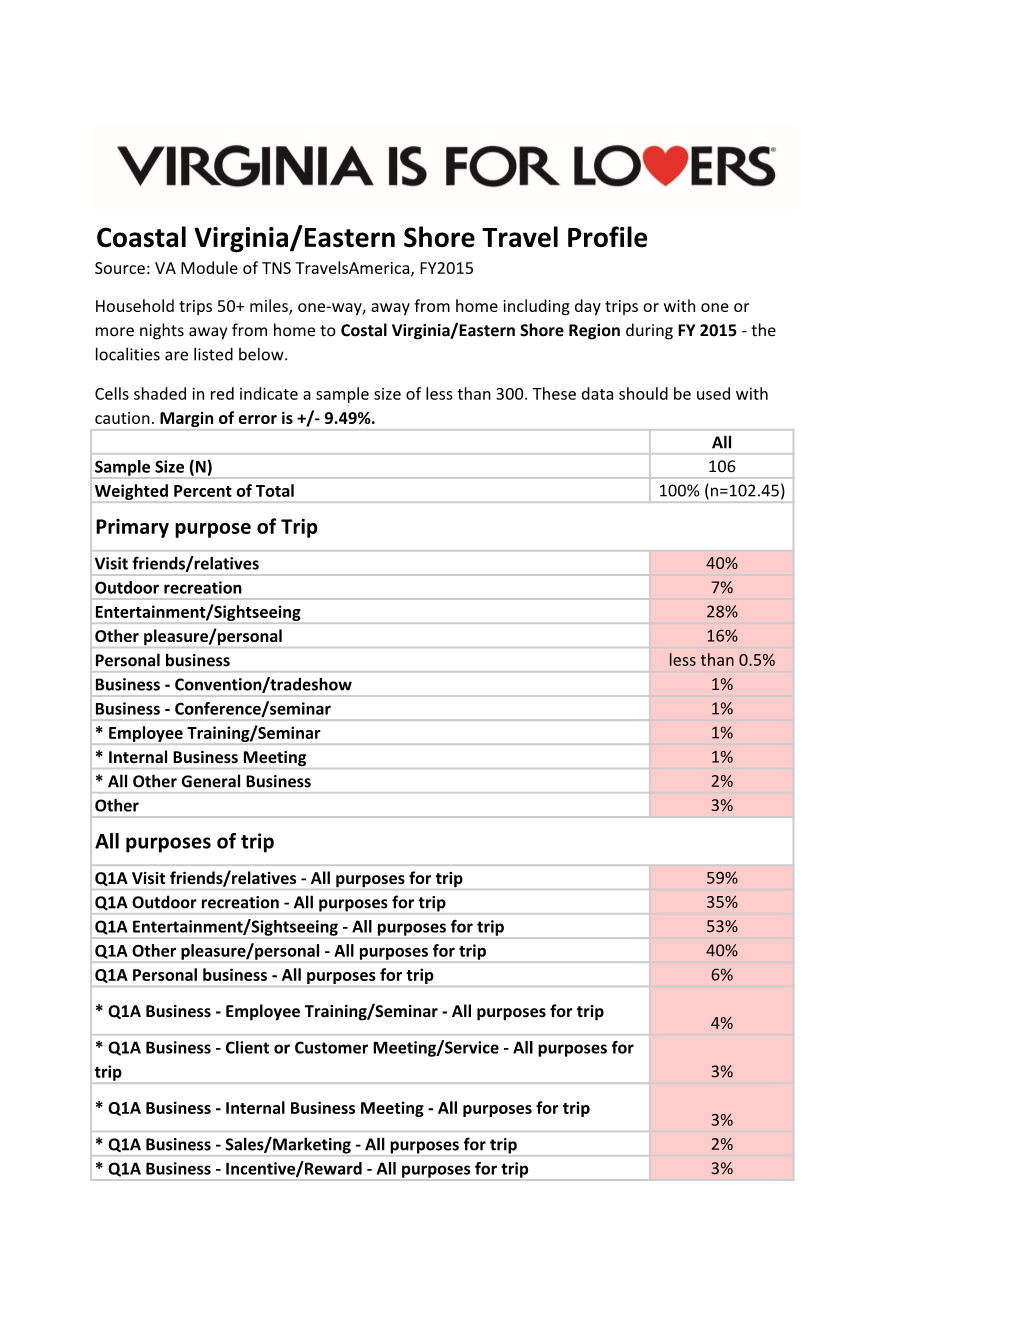 Coastal Virginia/Eastern Shore Travel Profile Source: VA Module of TNS Travelsamerica, FY2015